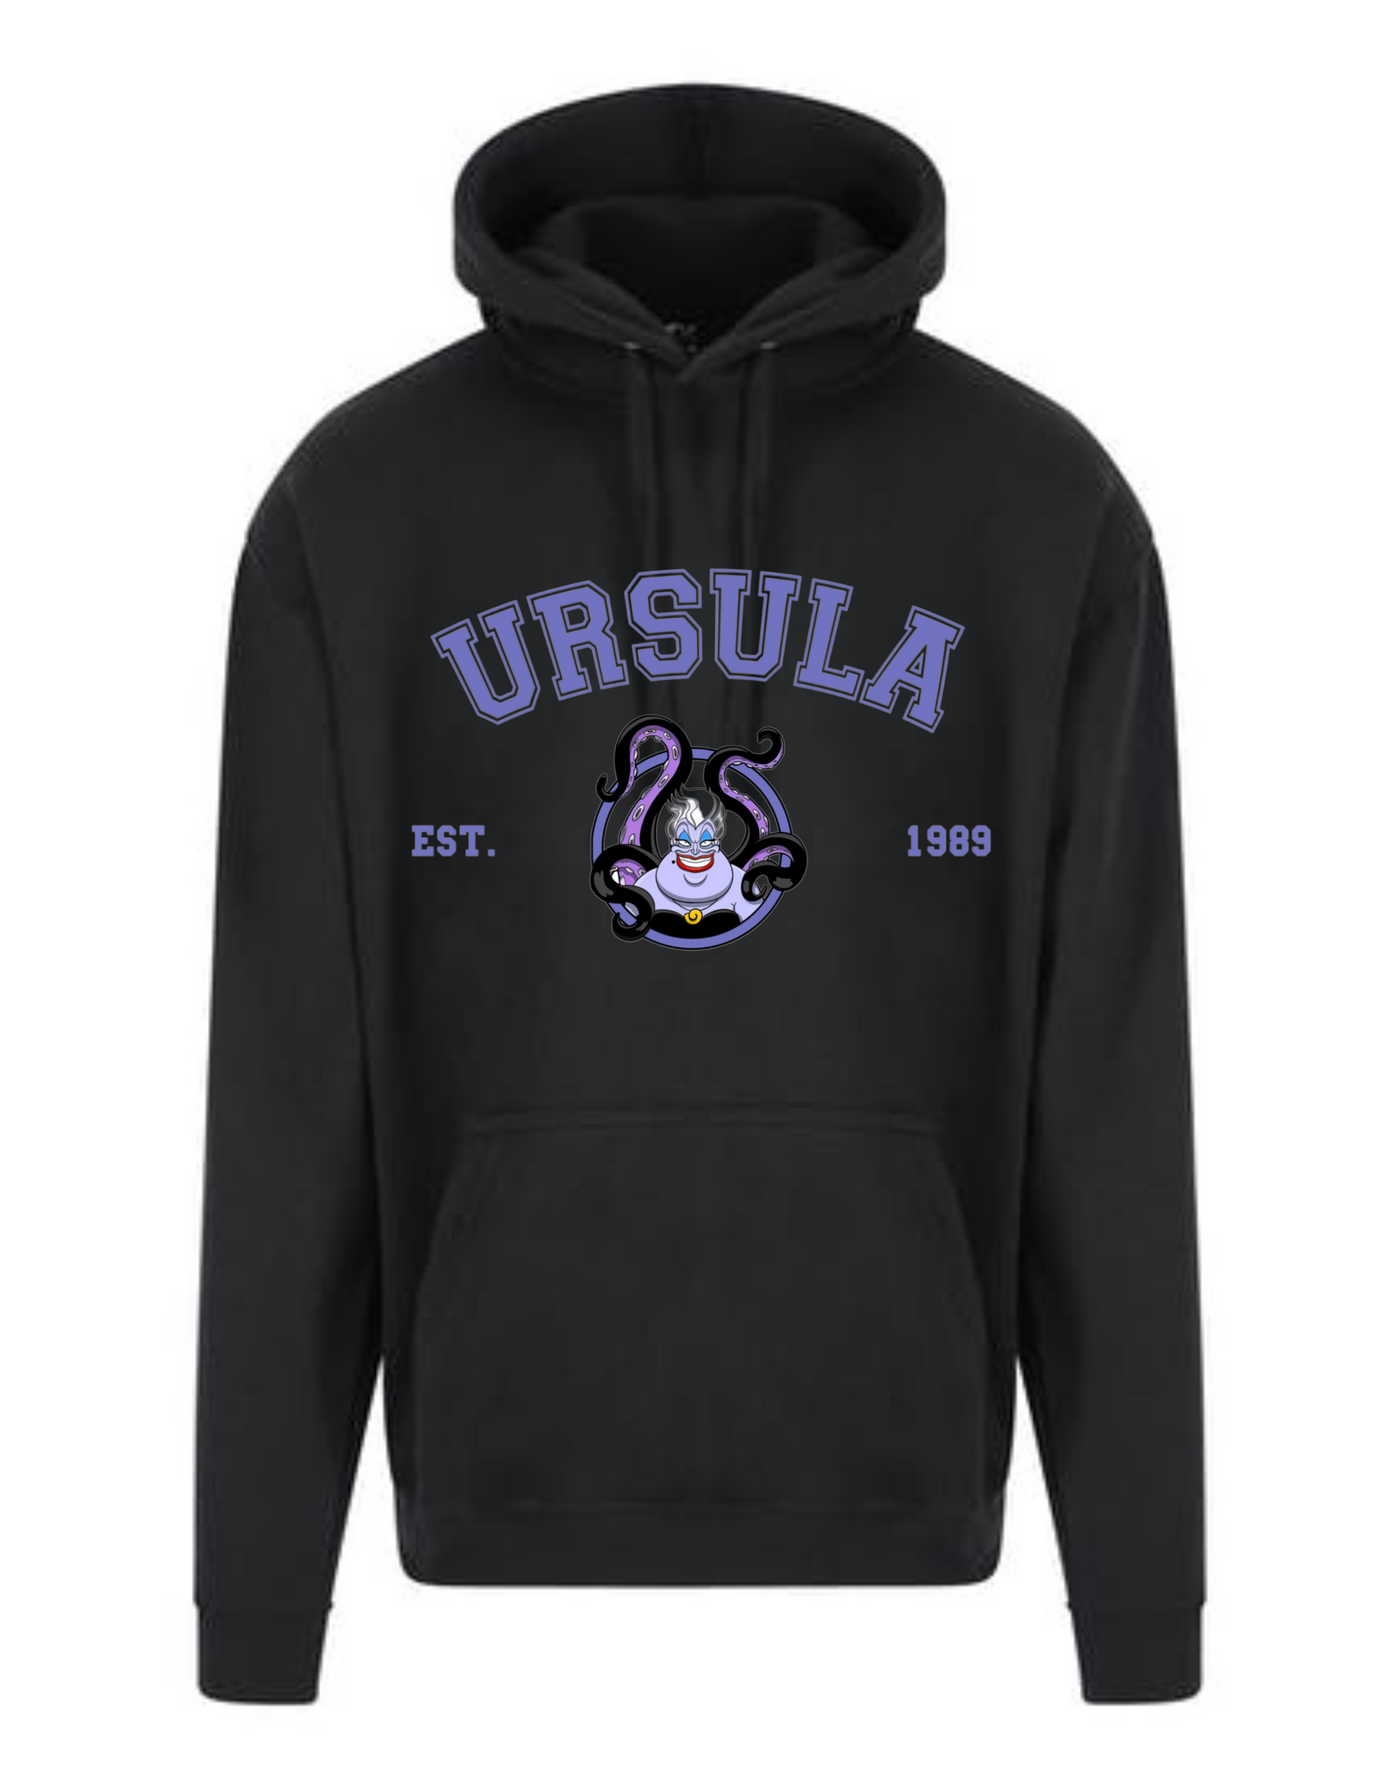 "Ursula" Front & Back Print Longline Unisex Hoodie